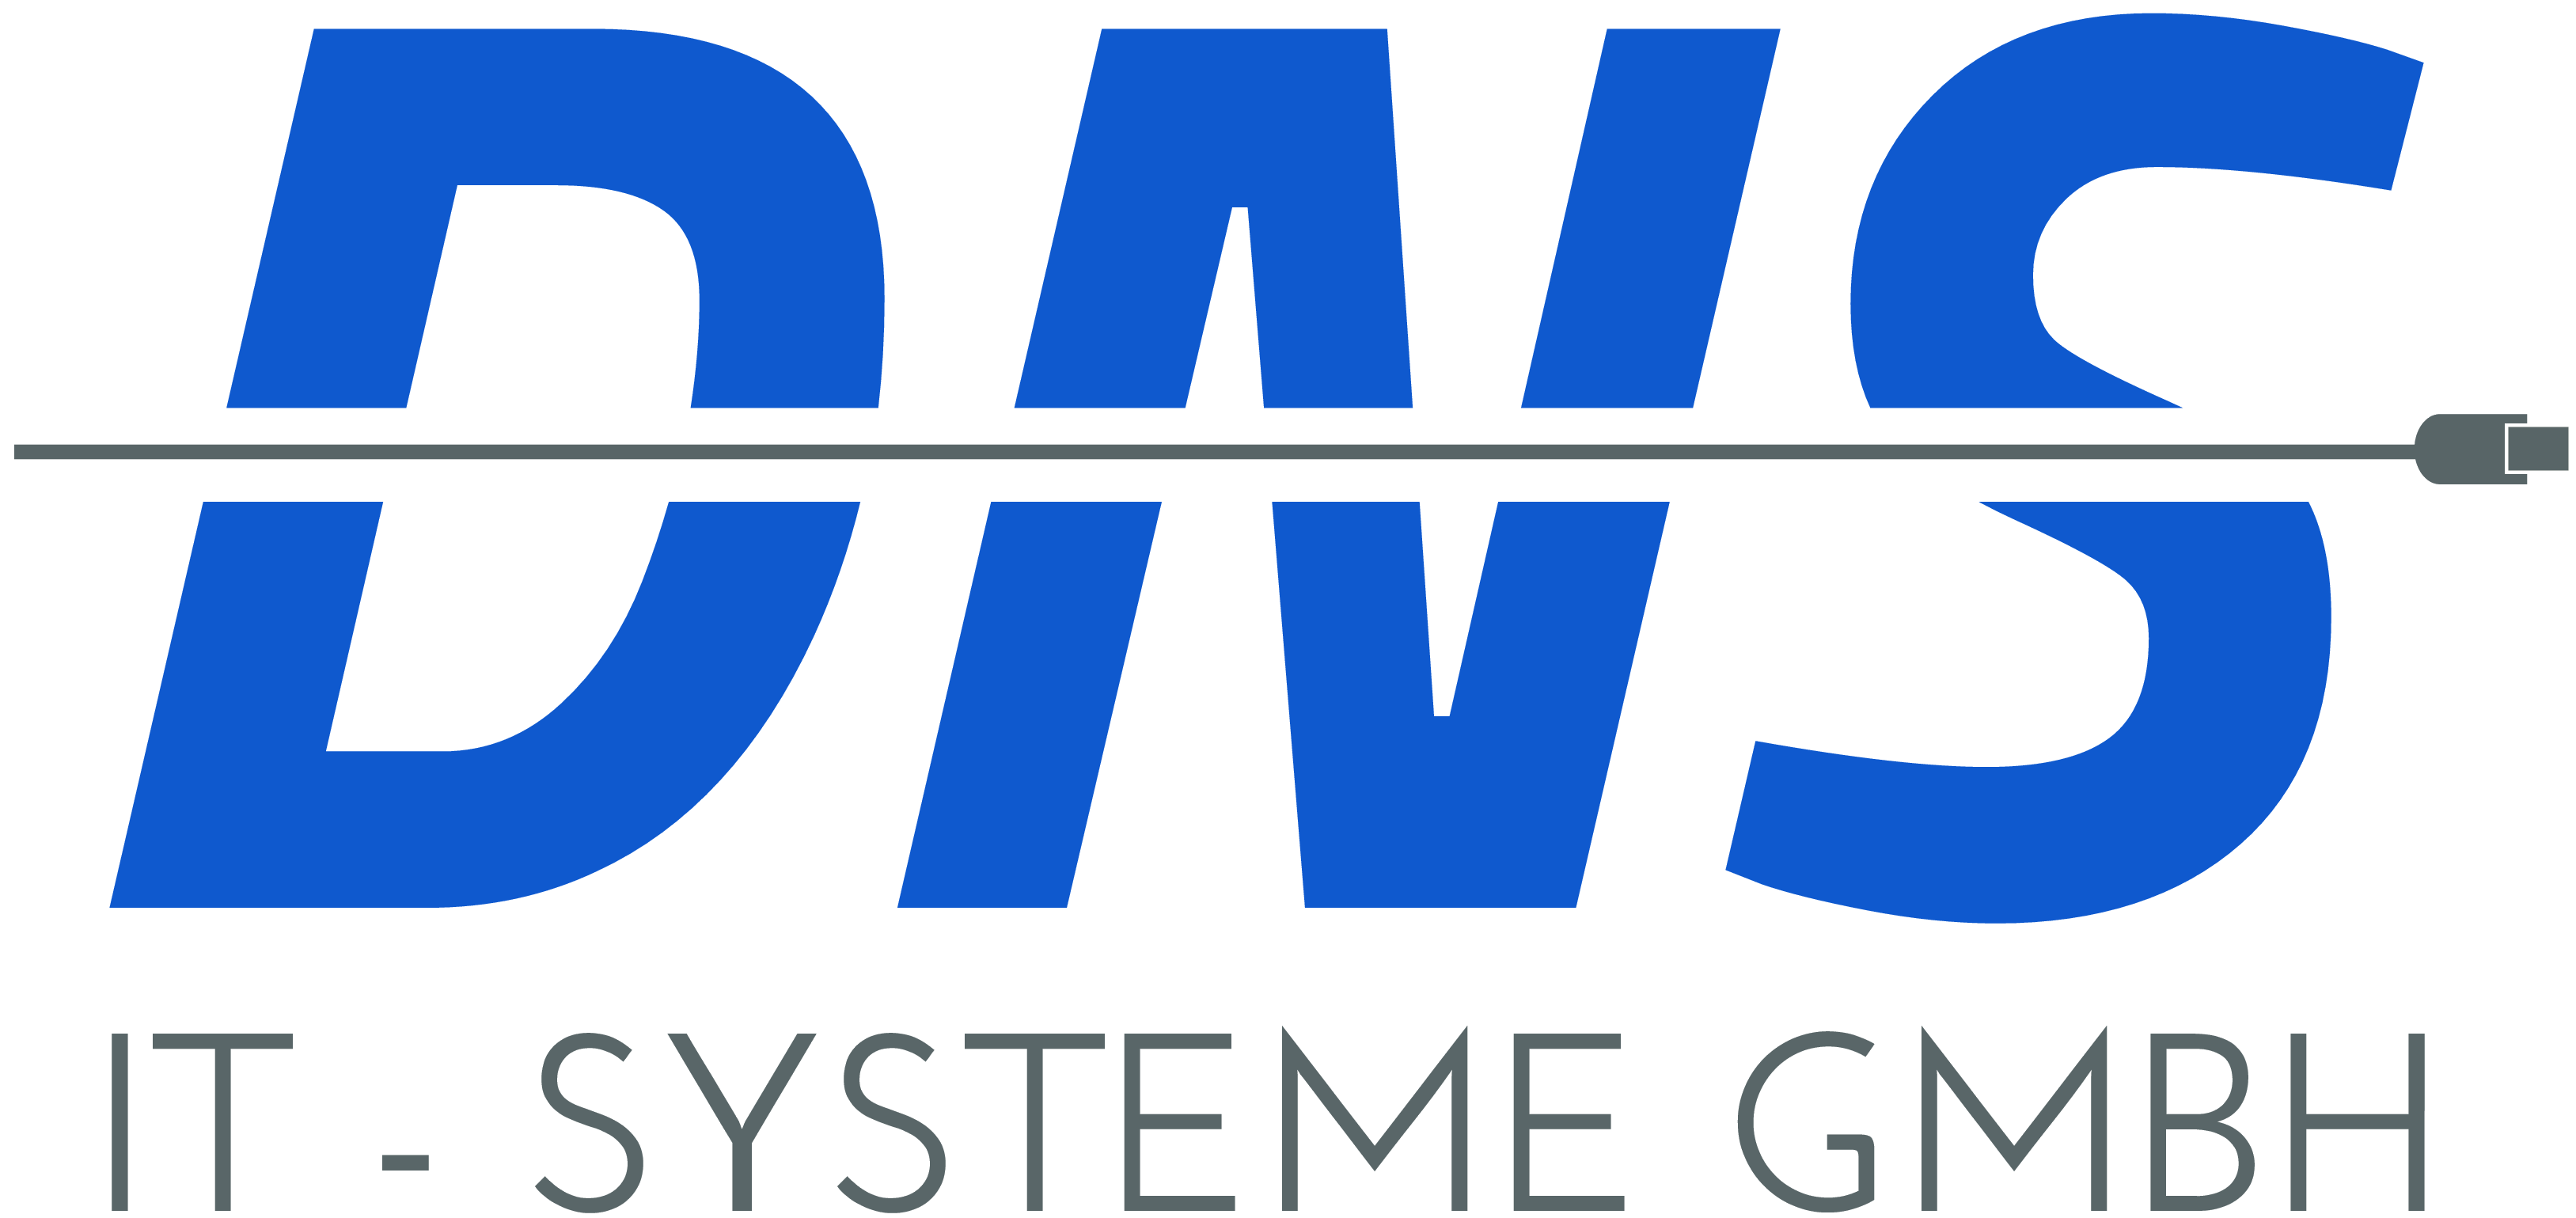 CVS IT Systeme